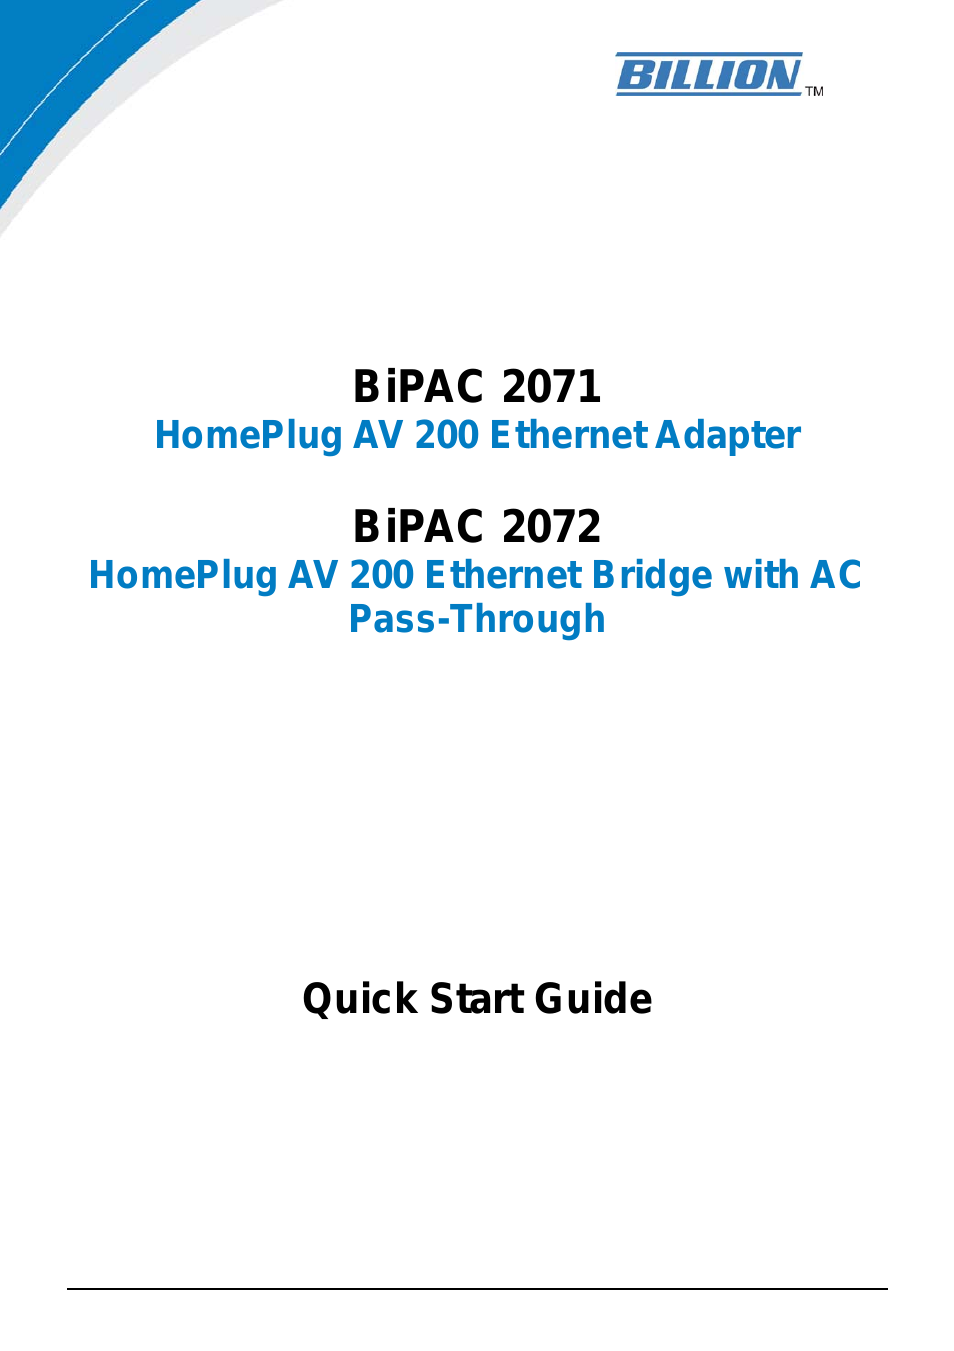 BiPAC 2072